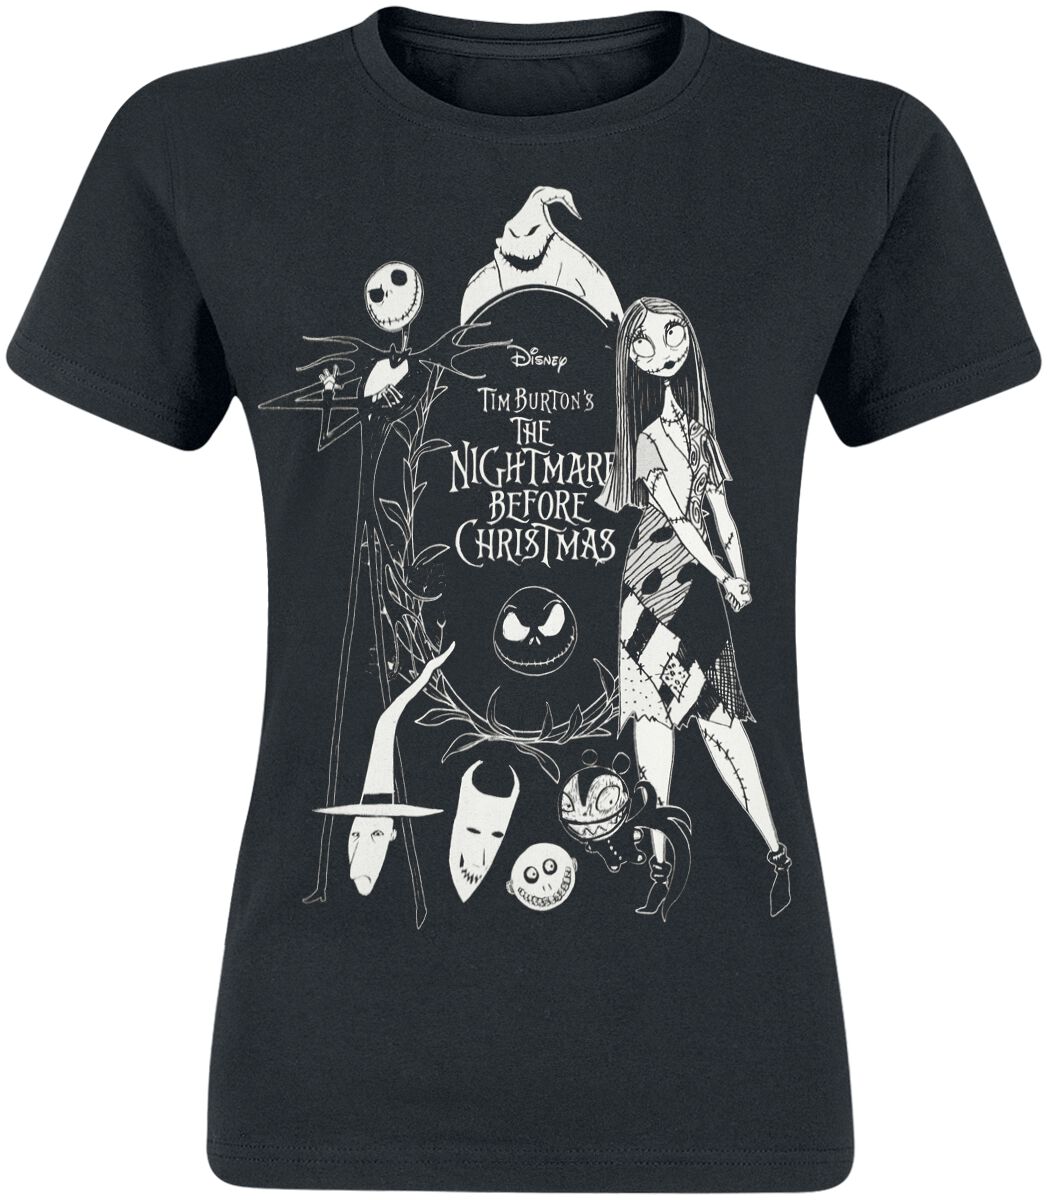 The Nightmare Before Christmas Nightmare Band T-Shirt schwarz in M